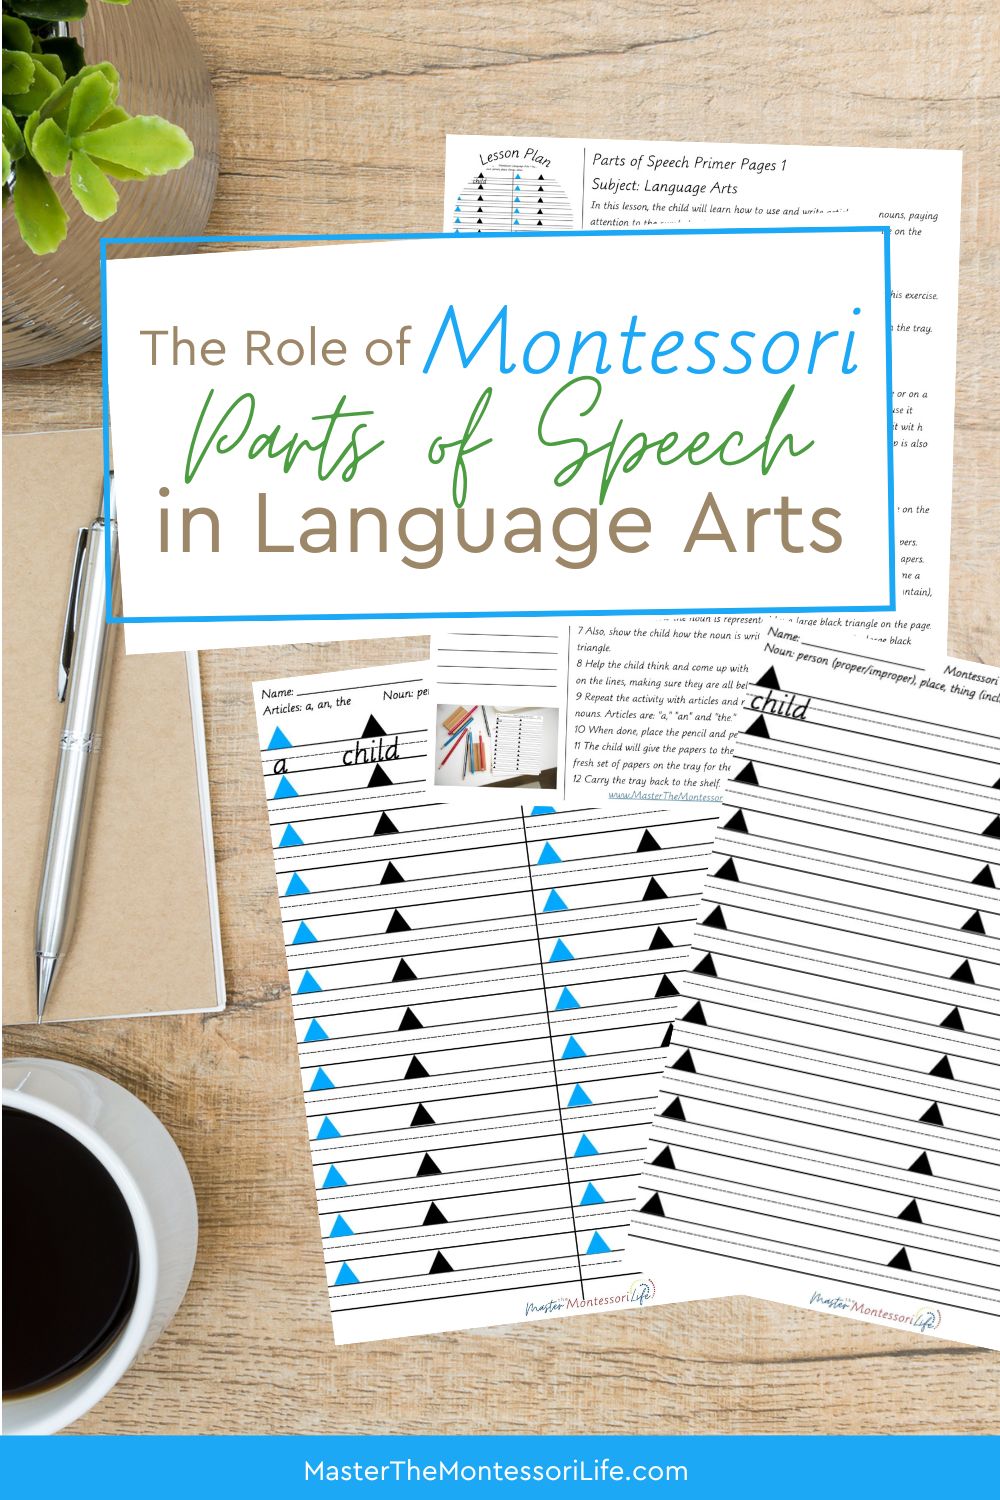 The Role of Montessori Parts of Speech in Language Arts